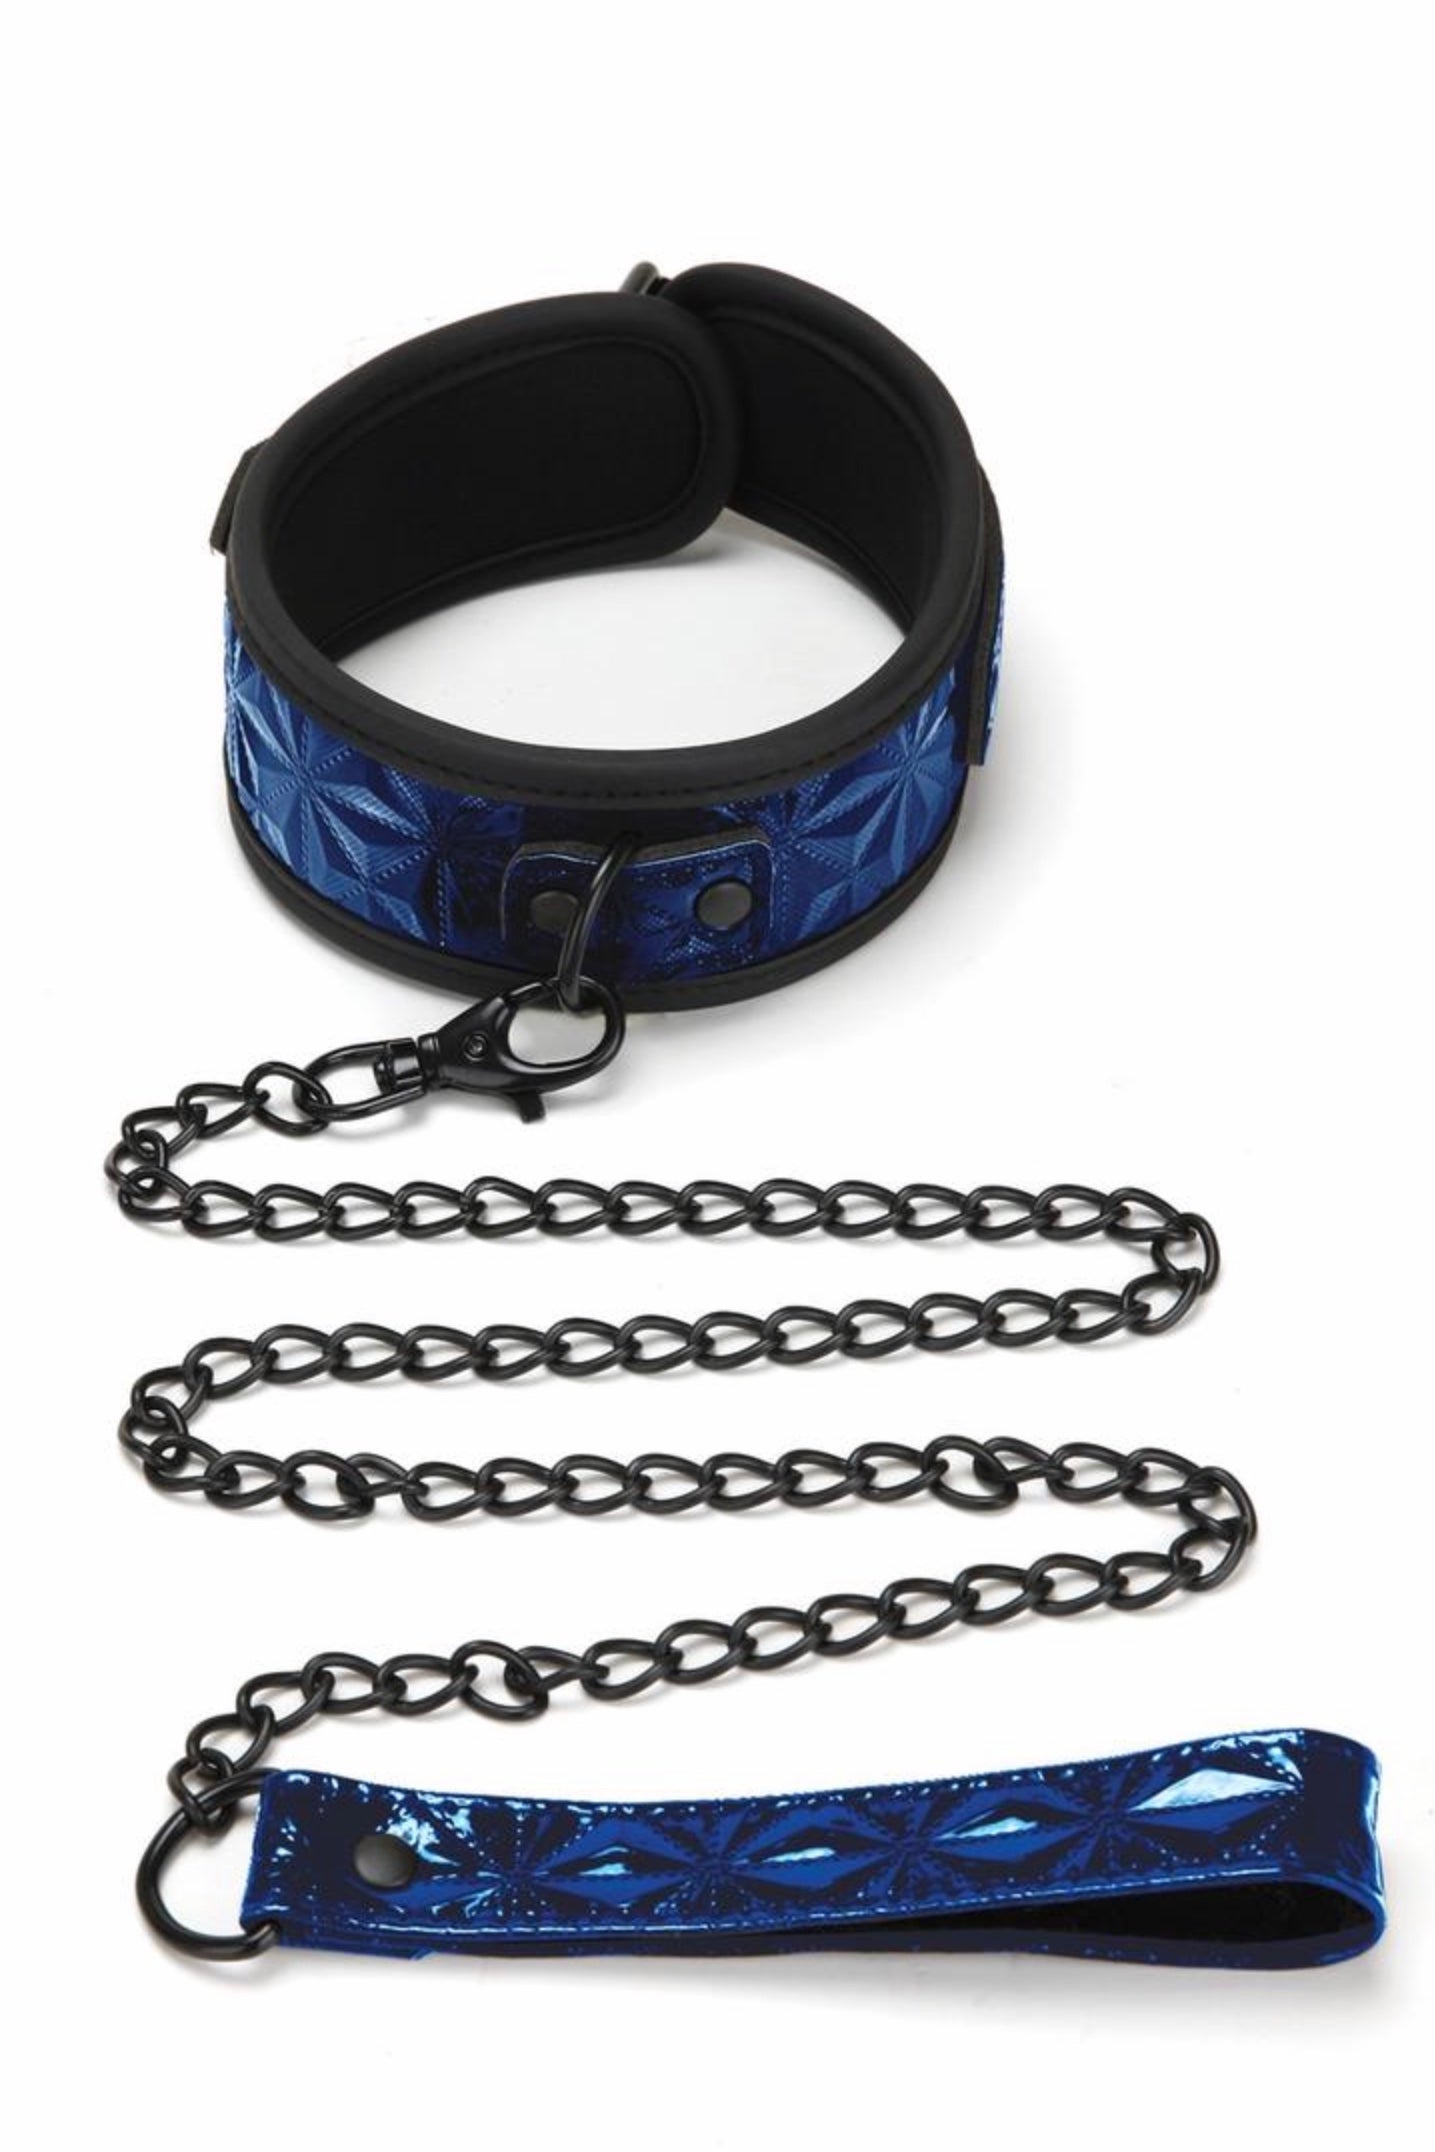 Diamond collar and leash - CurvynBeautiful 